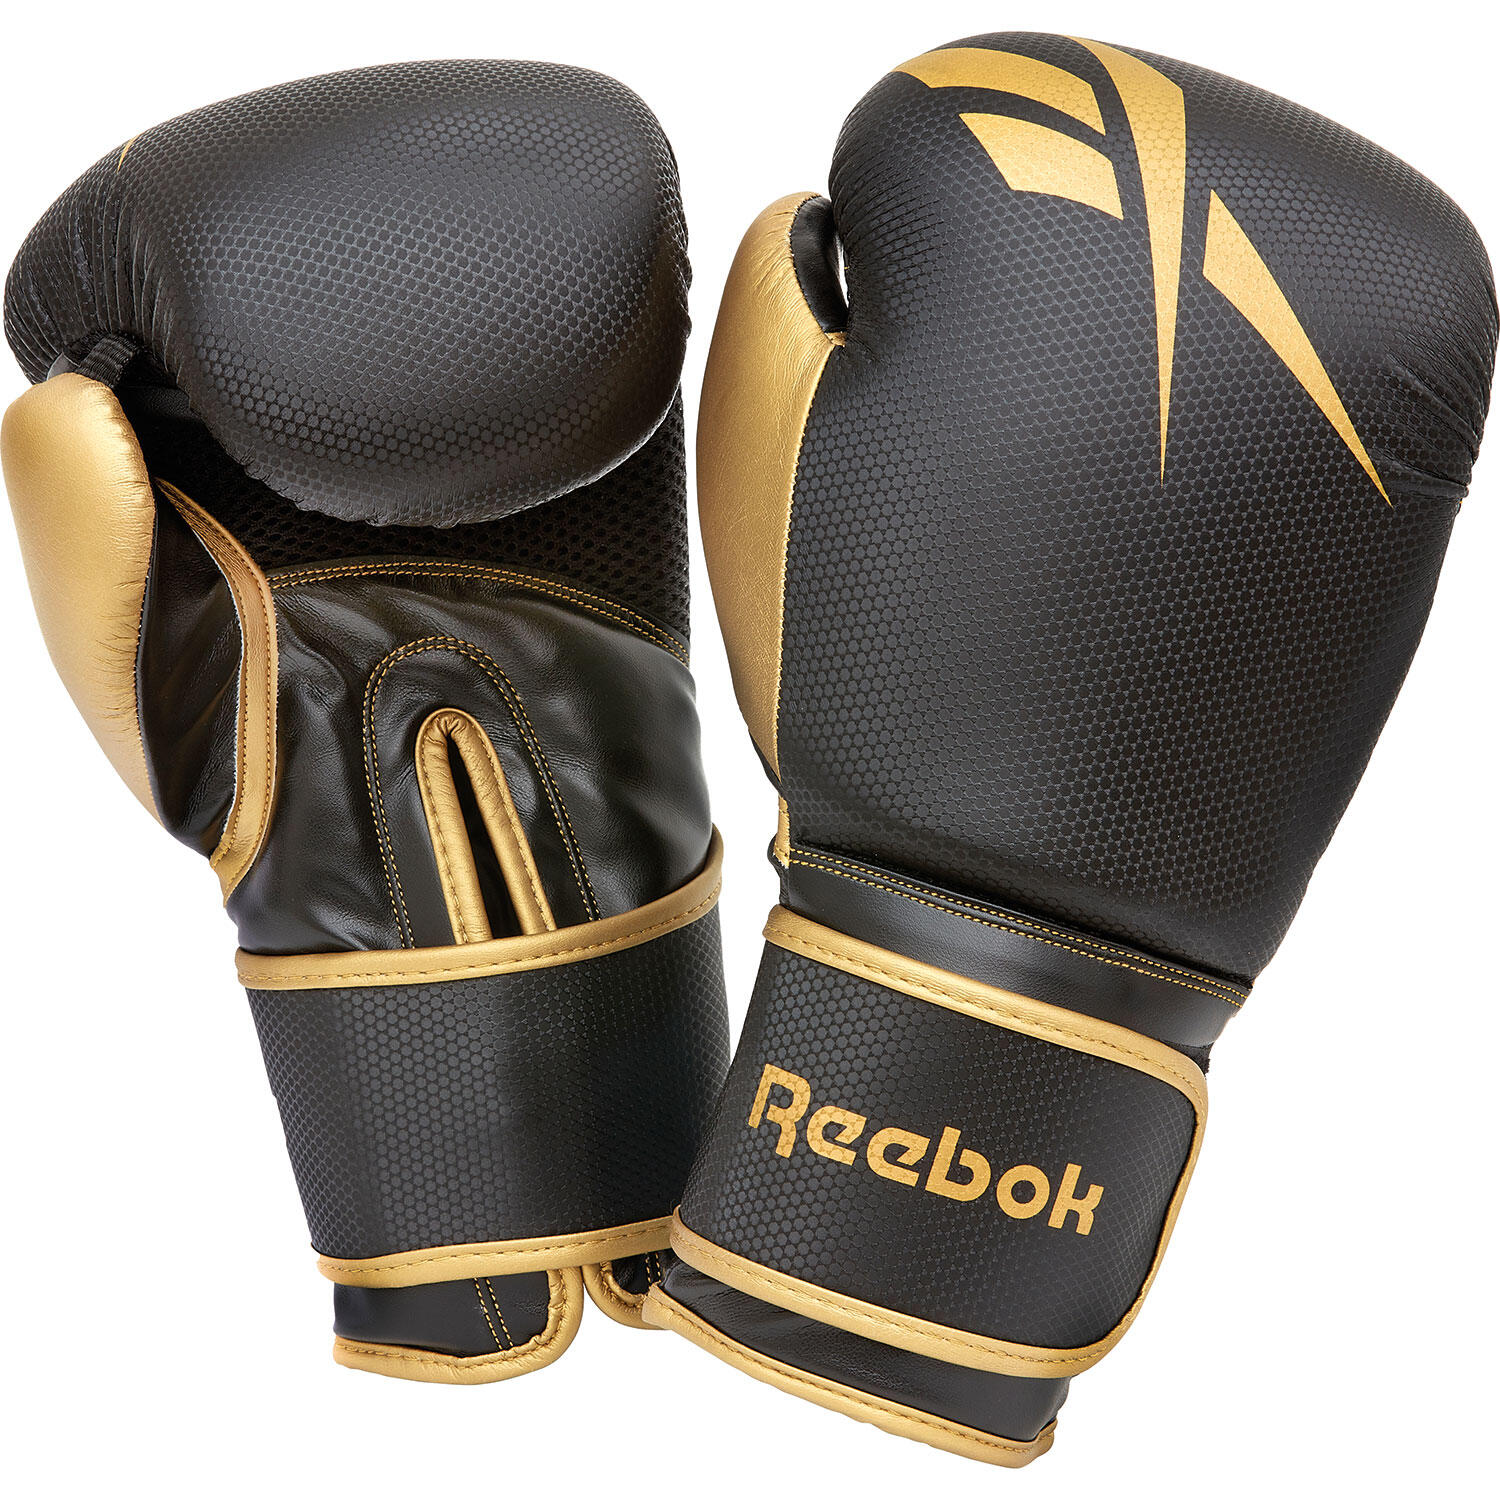 REEBOK Reebok Boxing Gloves - Black and Gold